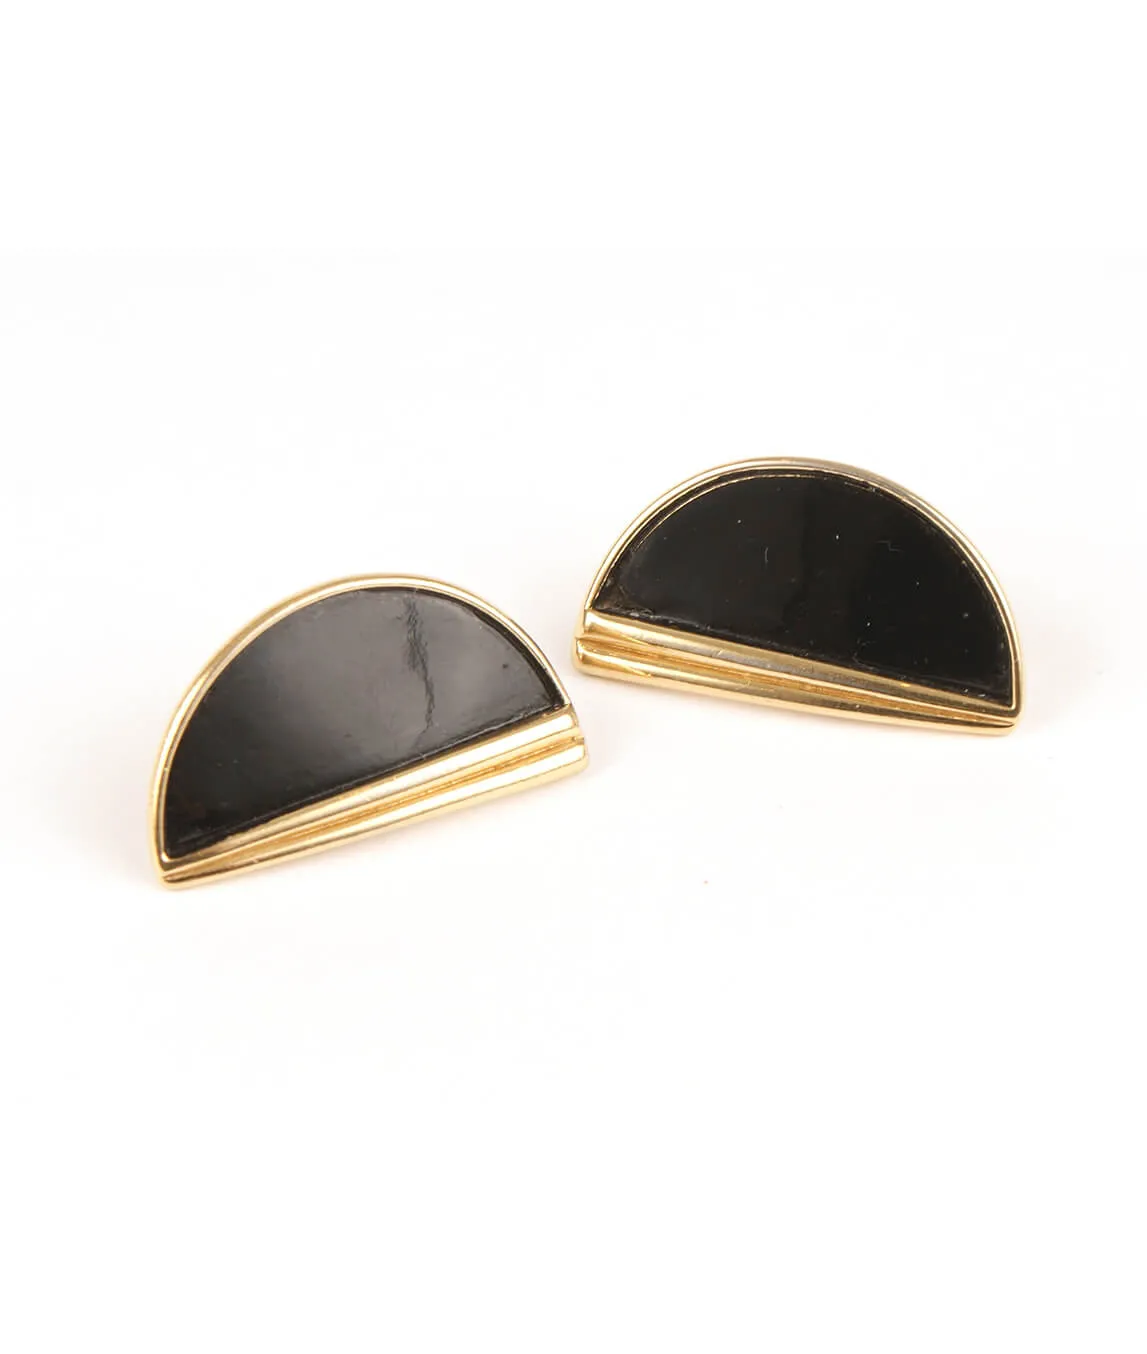 Trifari black enamel earrings